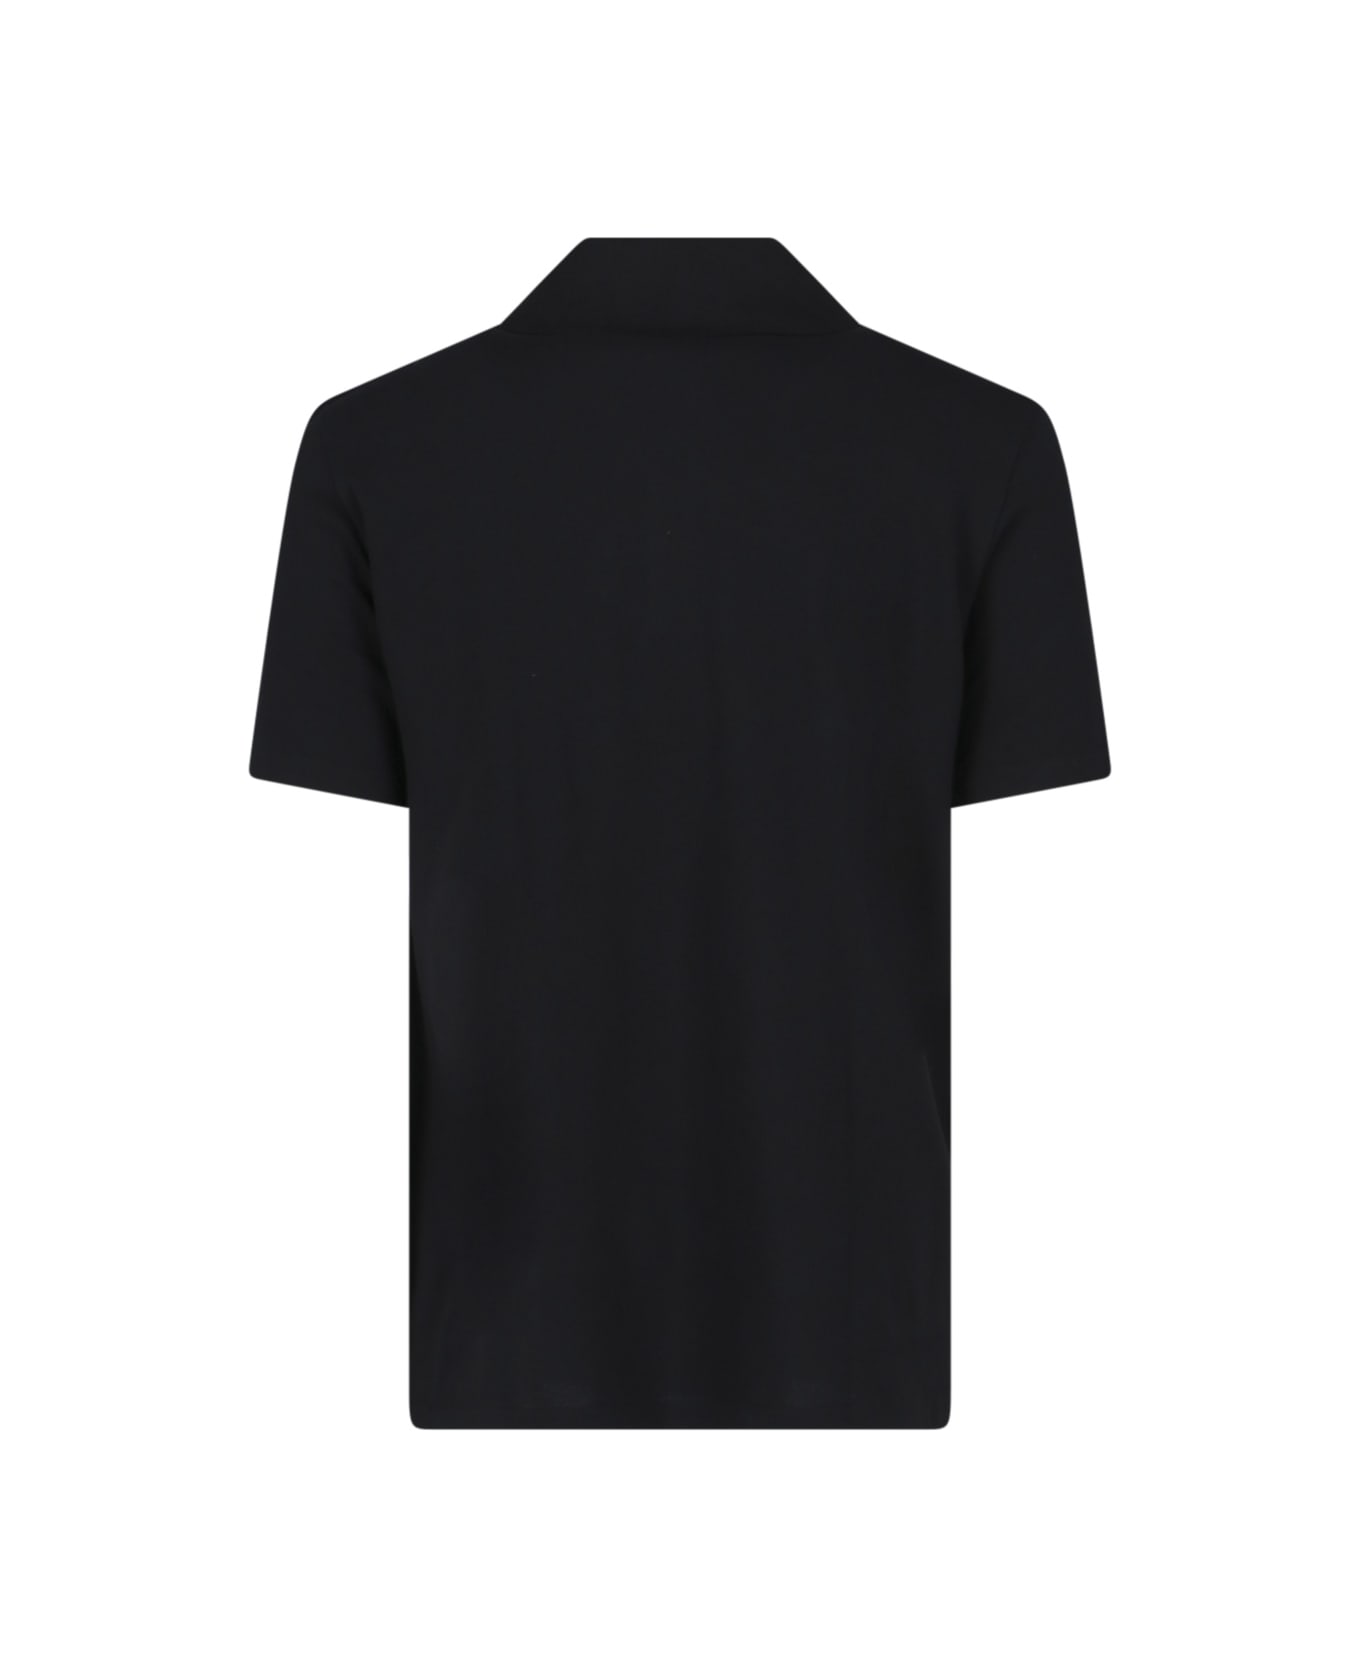 Balmain Logo Polo Shirt - Black   ポロシャツ